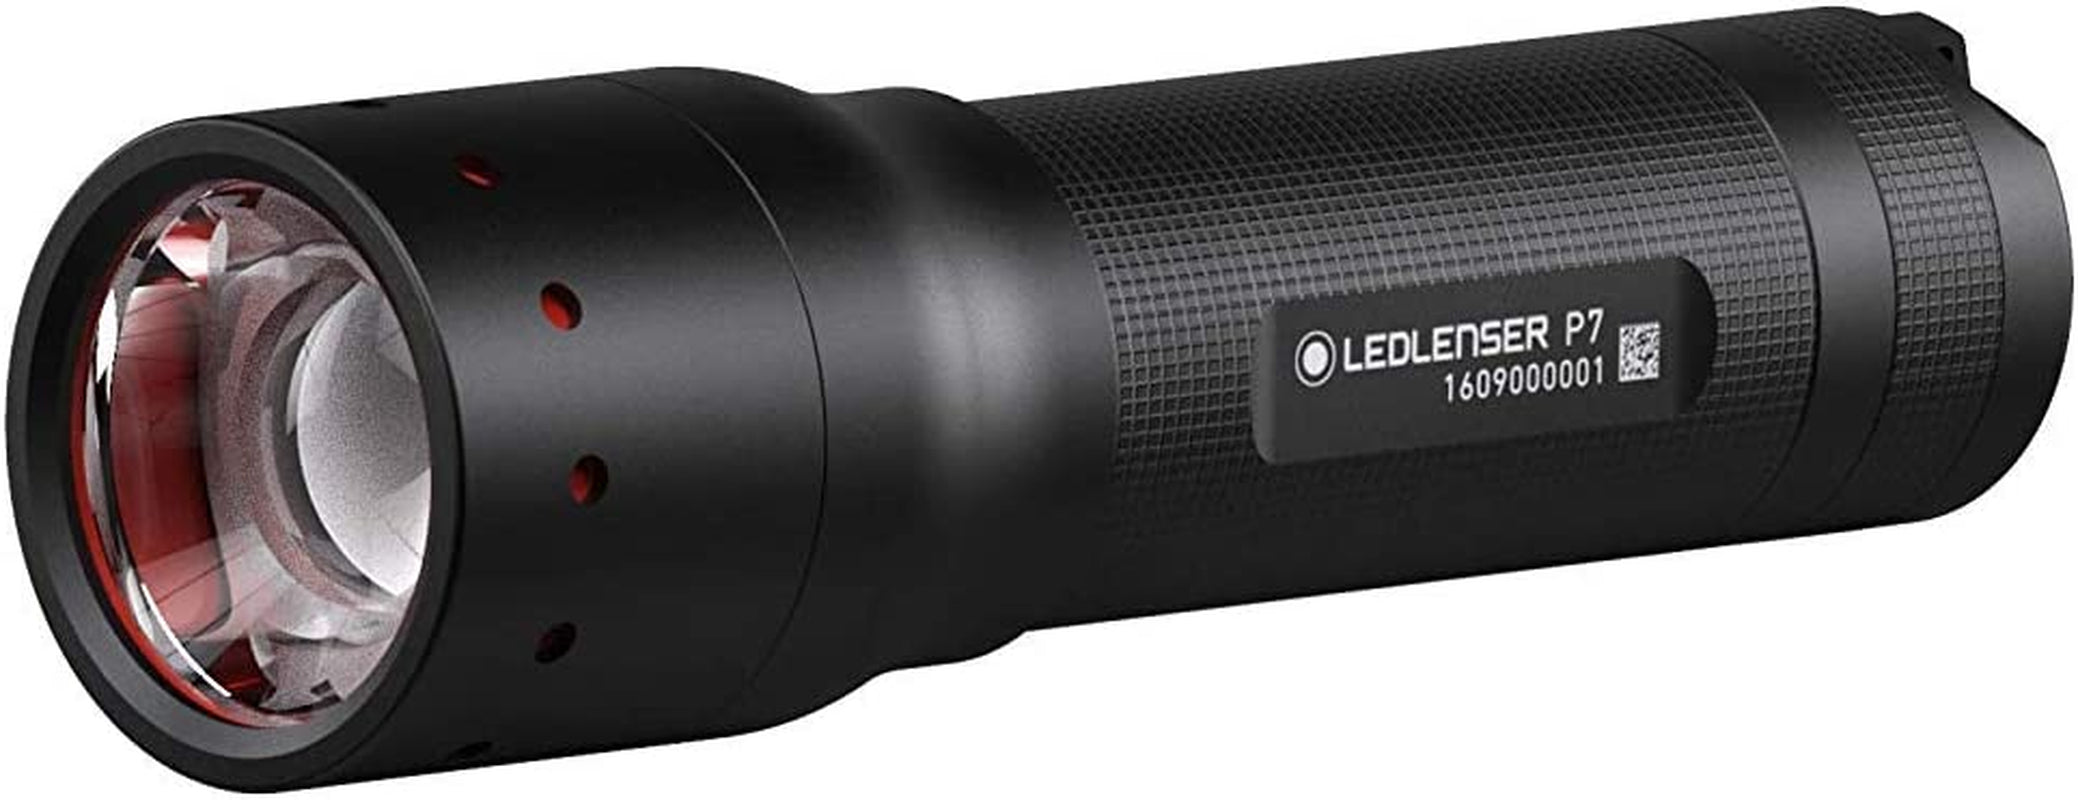 Led Lenser, Ledlenser 501046 P7 Professional LED Torch, Black. Upgraded to 450 Lumens, High Performance, Compact, Powerful, 1.5 V, 13 X 3.7 X 13 Cm